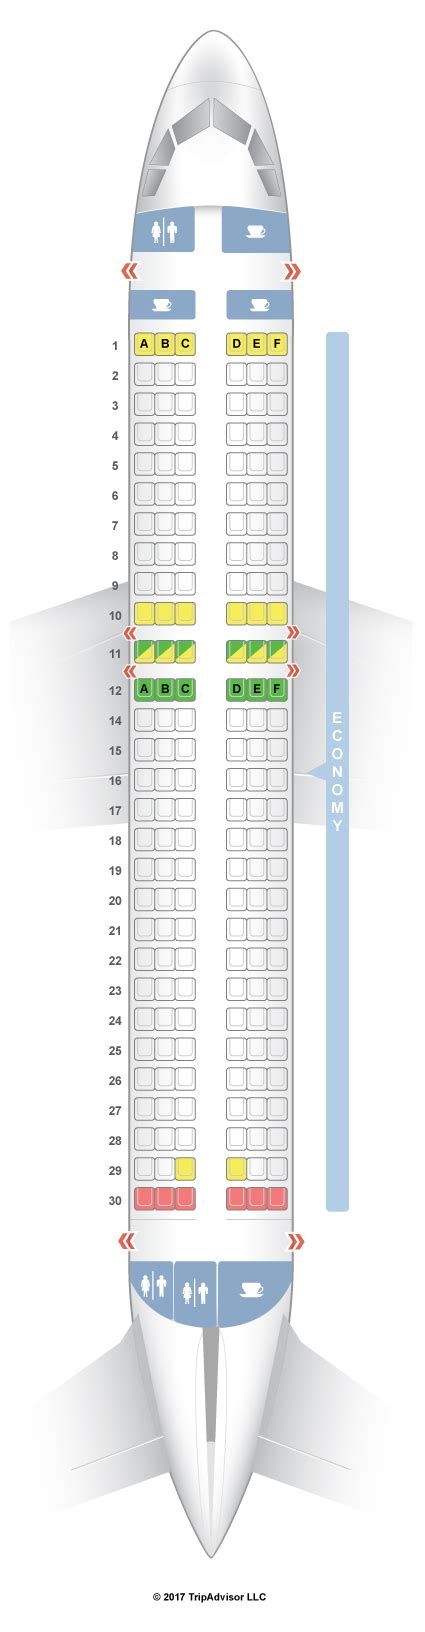 Seatguru Seat Map Sas Airbus A320neo 320